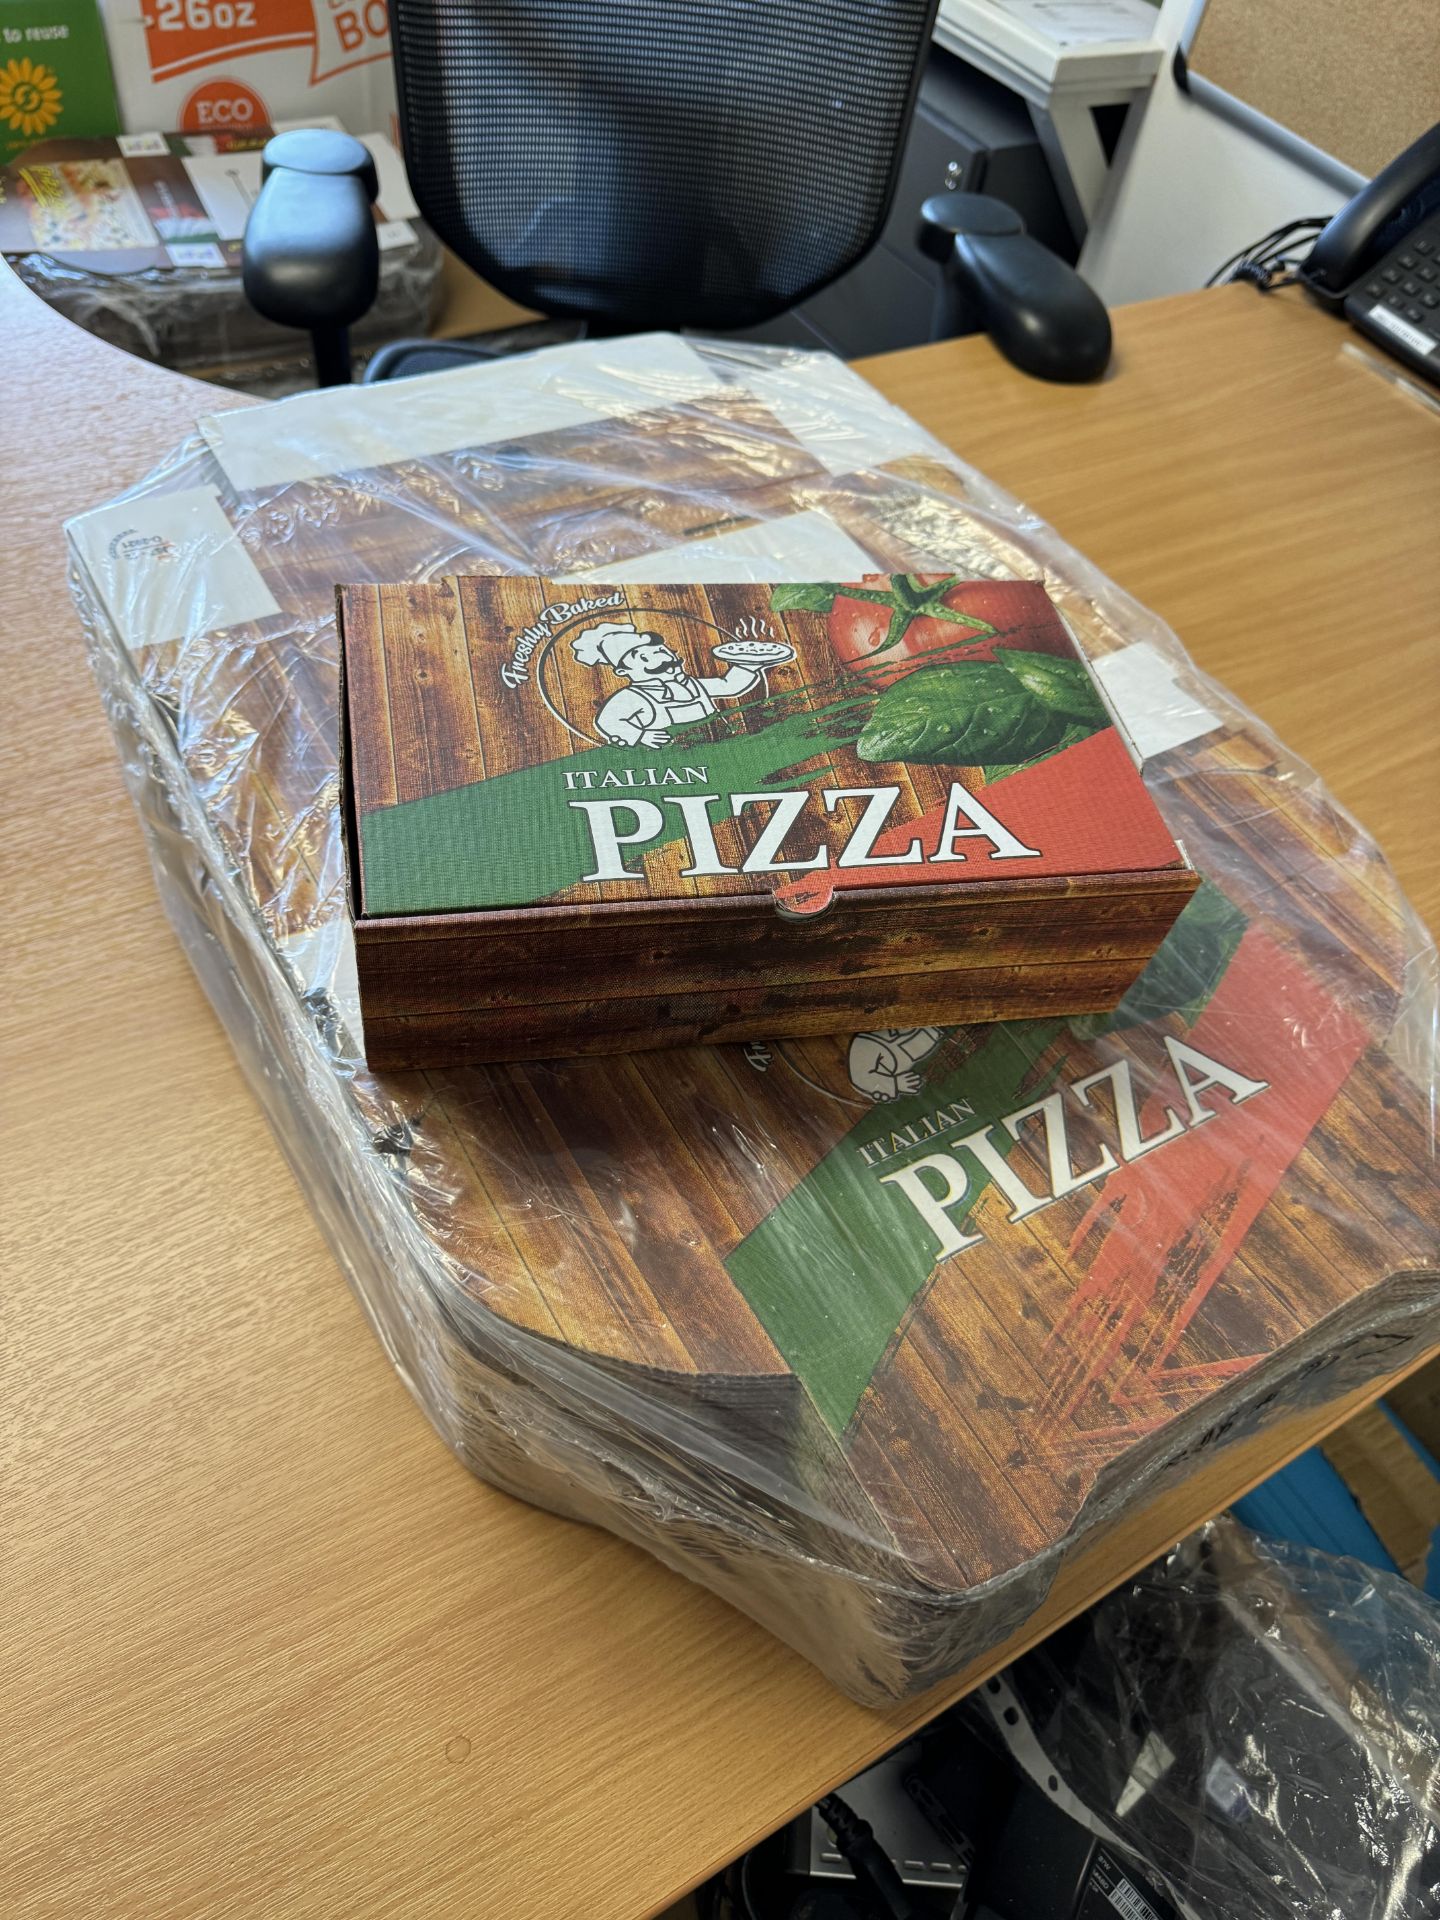 Circa 1260 - Italian Pizza Calzone Boxes (Cardboard) - Multiple Uses RRP £182